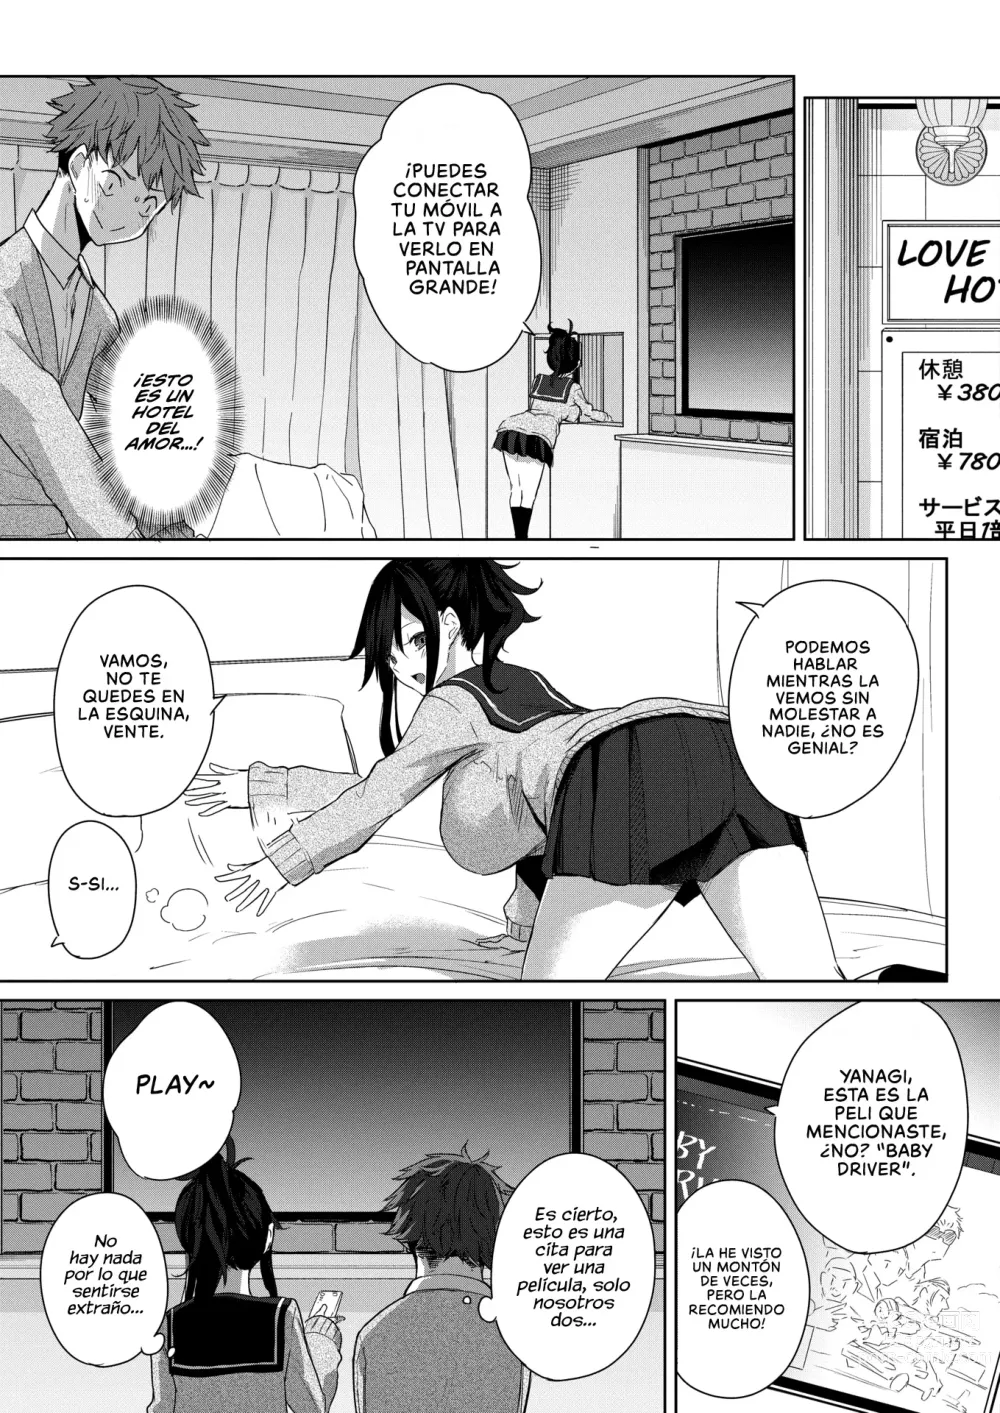 Page 5 of manga Cita Ideal